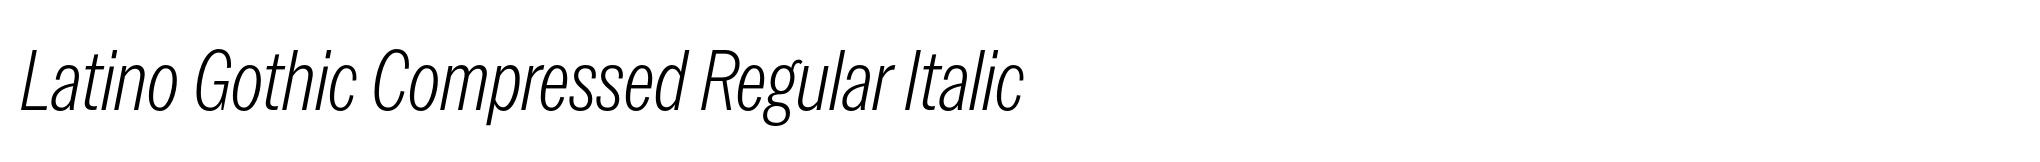 Latino Gothic Compressed Regular Italic image